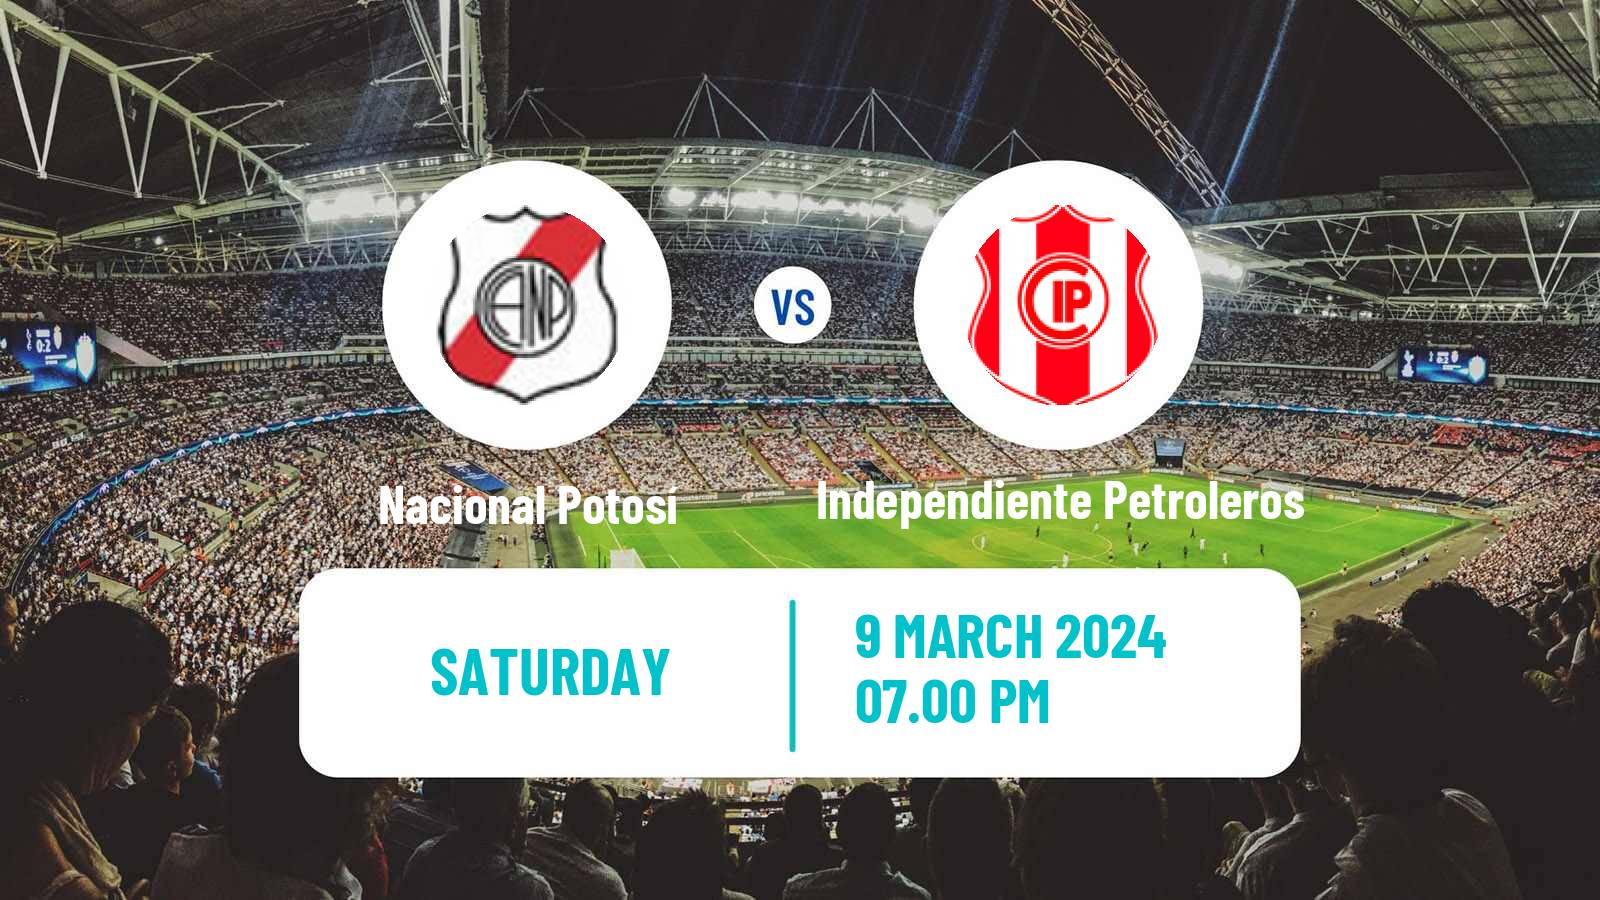 Soccer Bolivian Division Profesional Nacional Potosí - Independiente Petroleros